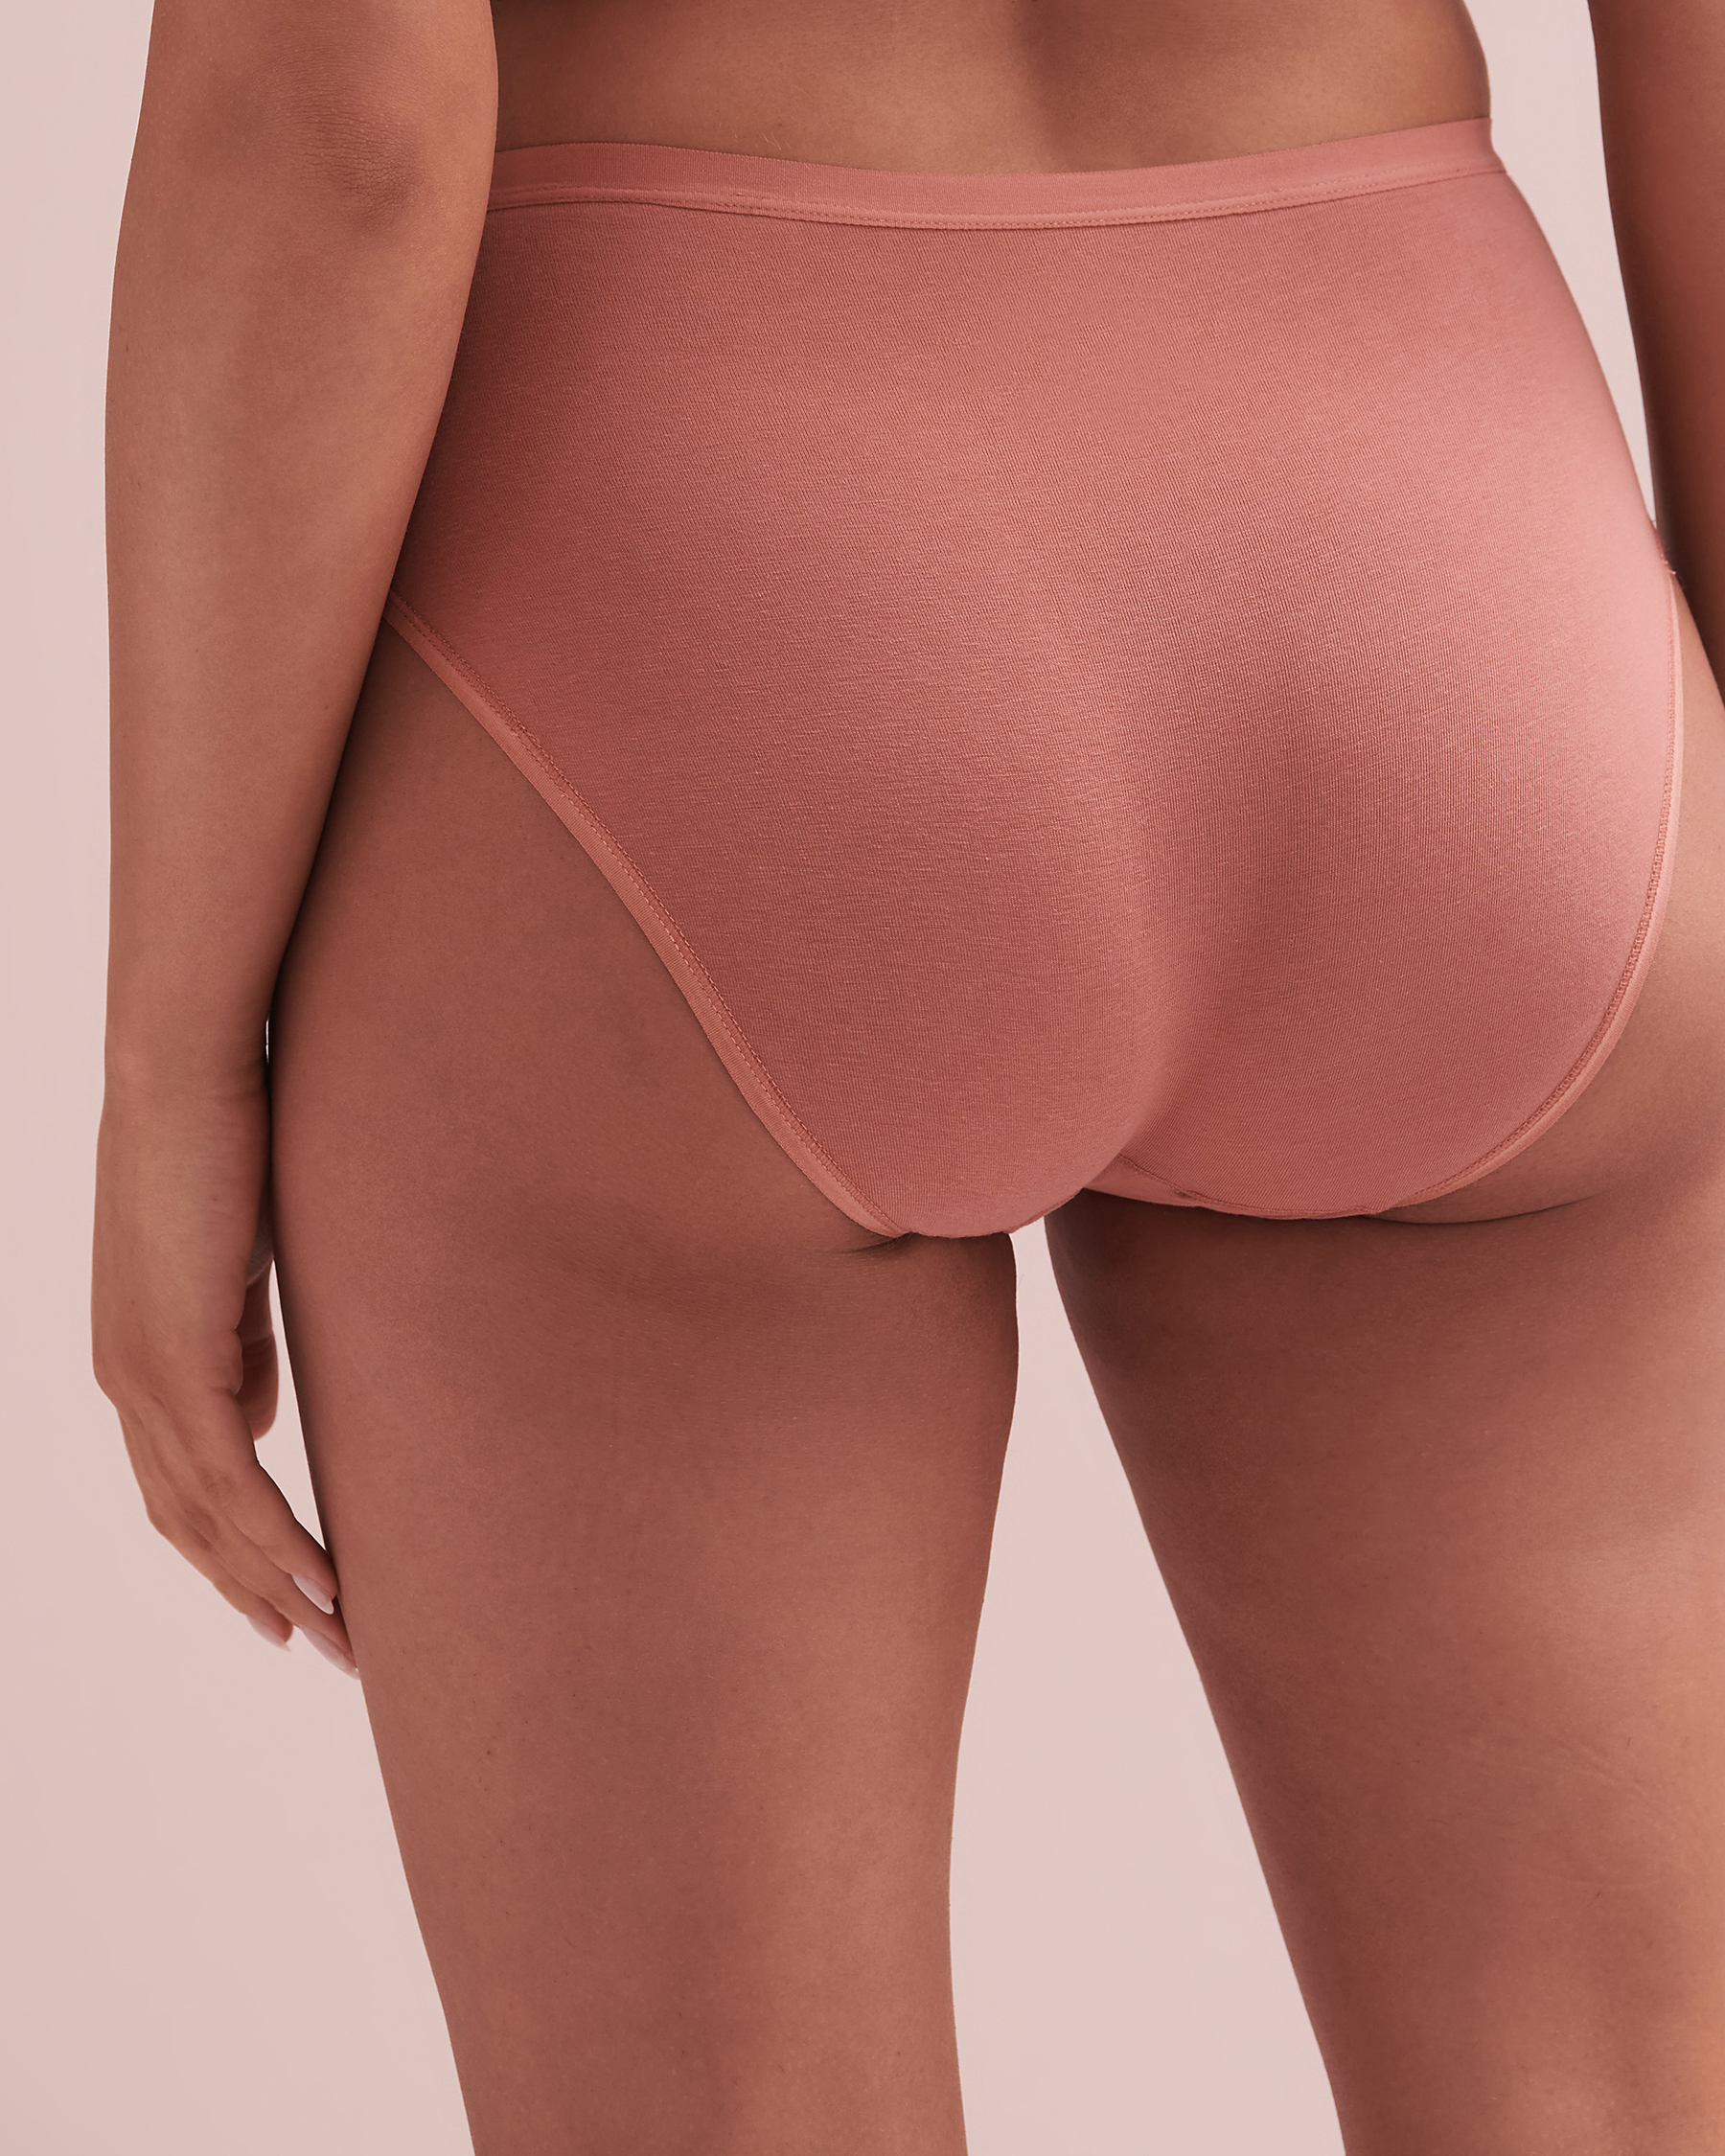 High Waist Bikini Cotton Period Panty by Newex Peach 20300190 - View2